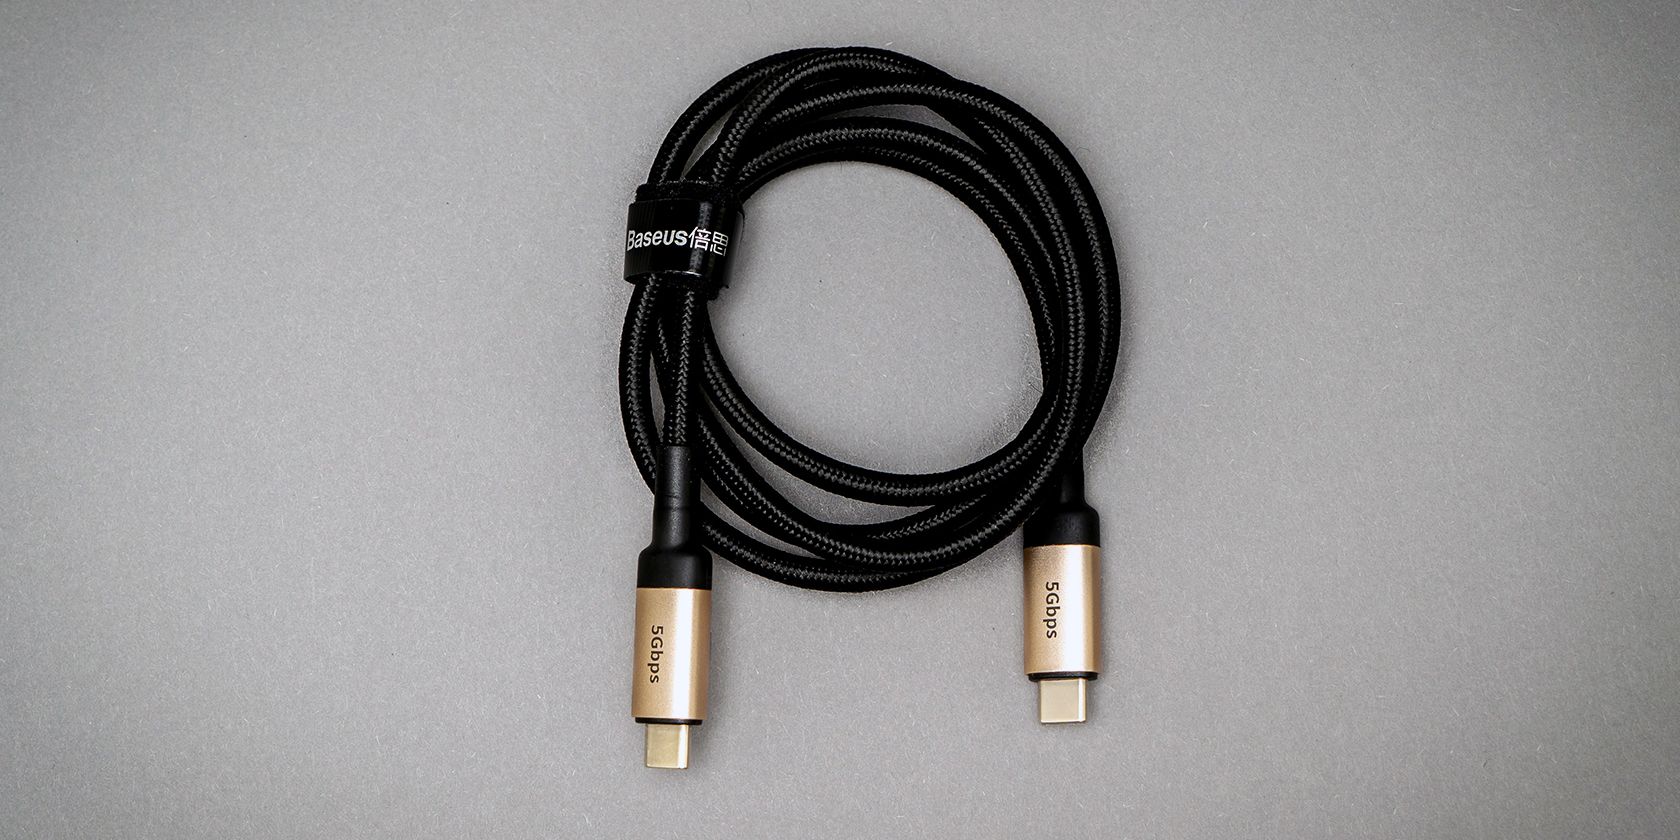 USB-C vs. Lightning Port: Which Is Best?